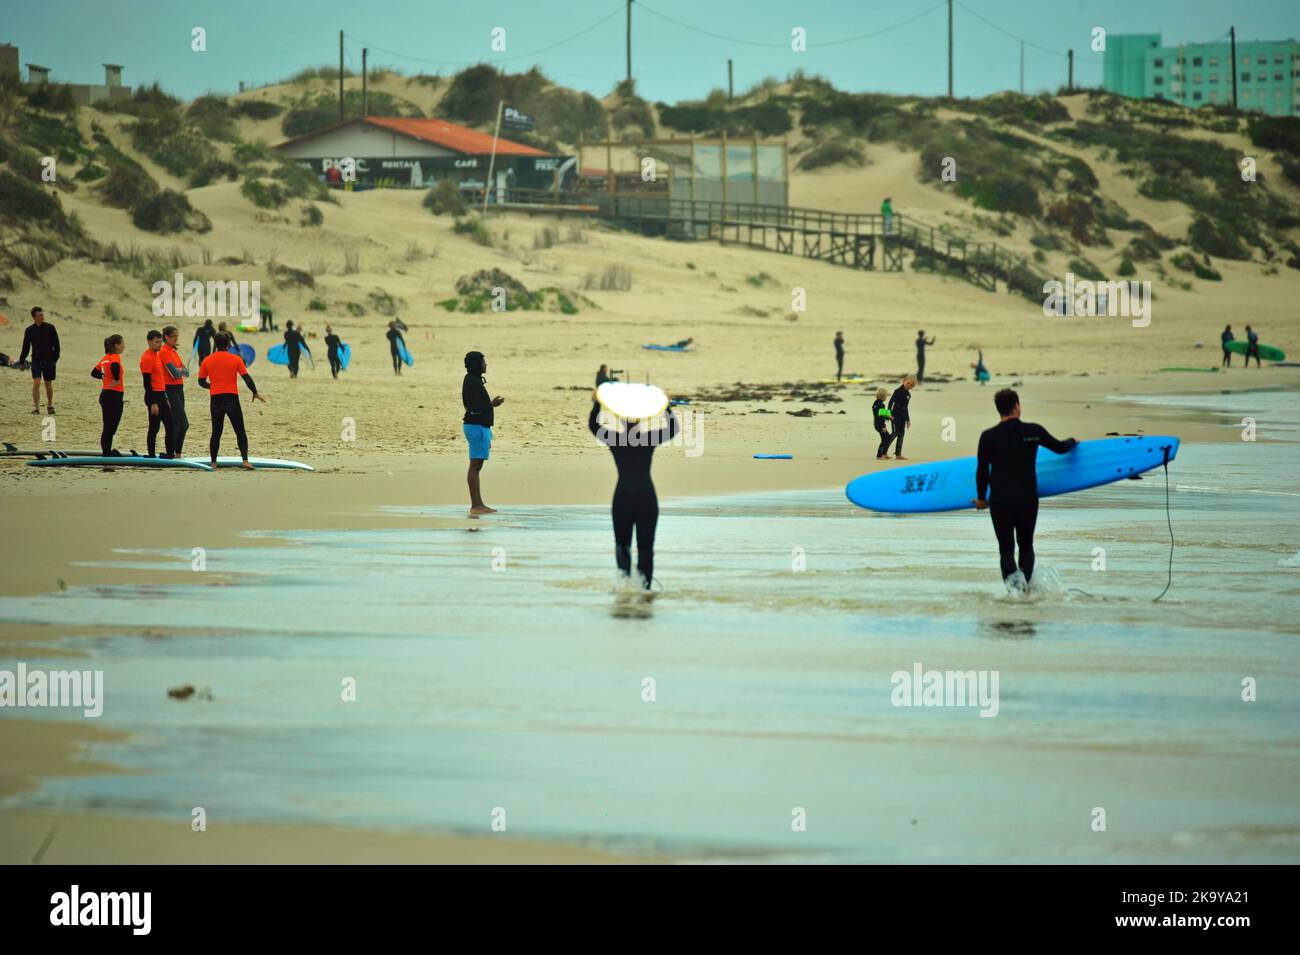 Surfers on the beach, Peniche, Portugal Stock Photo